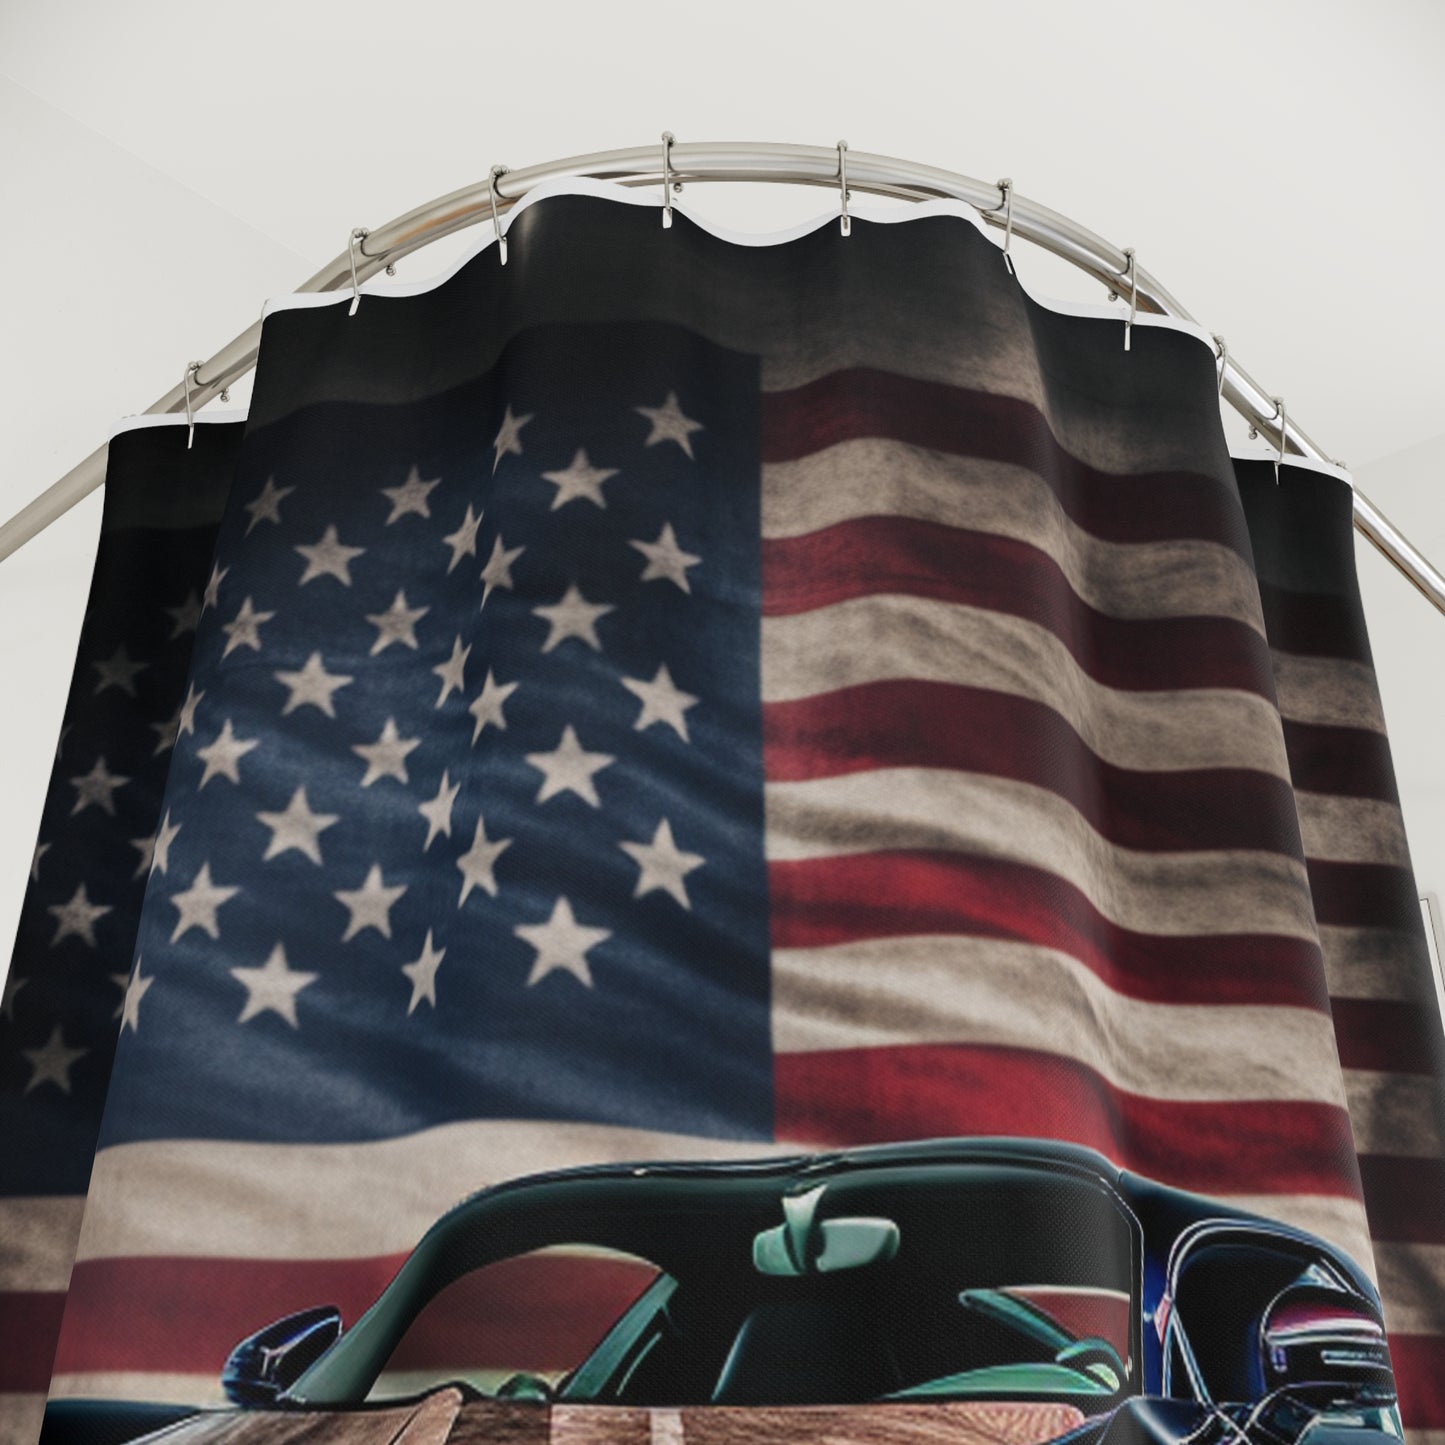 Polyester Shower Curtain Bugatti American Flag 4